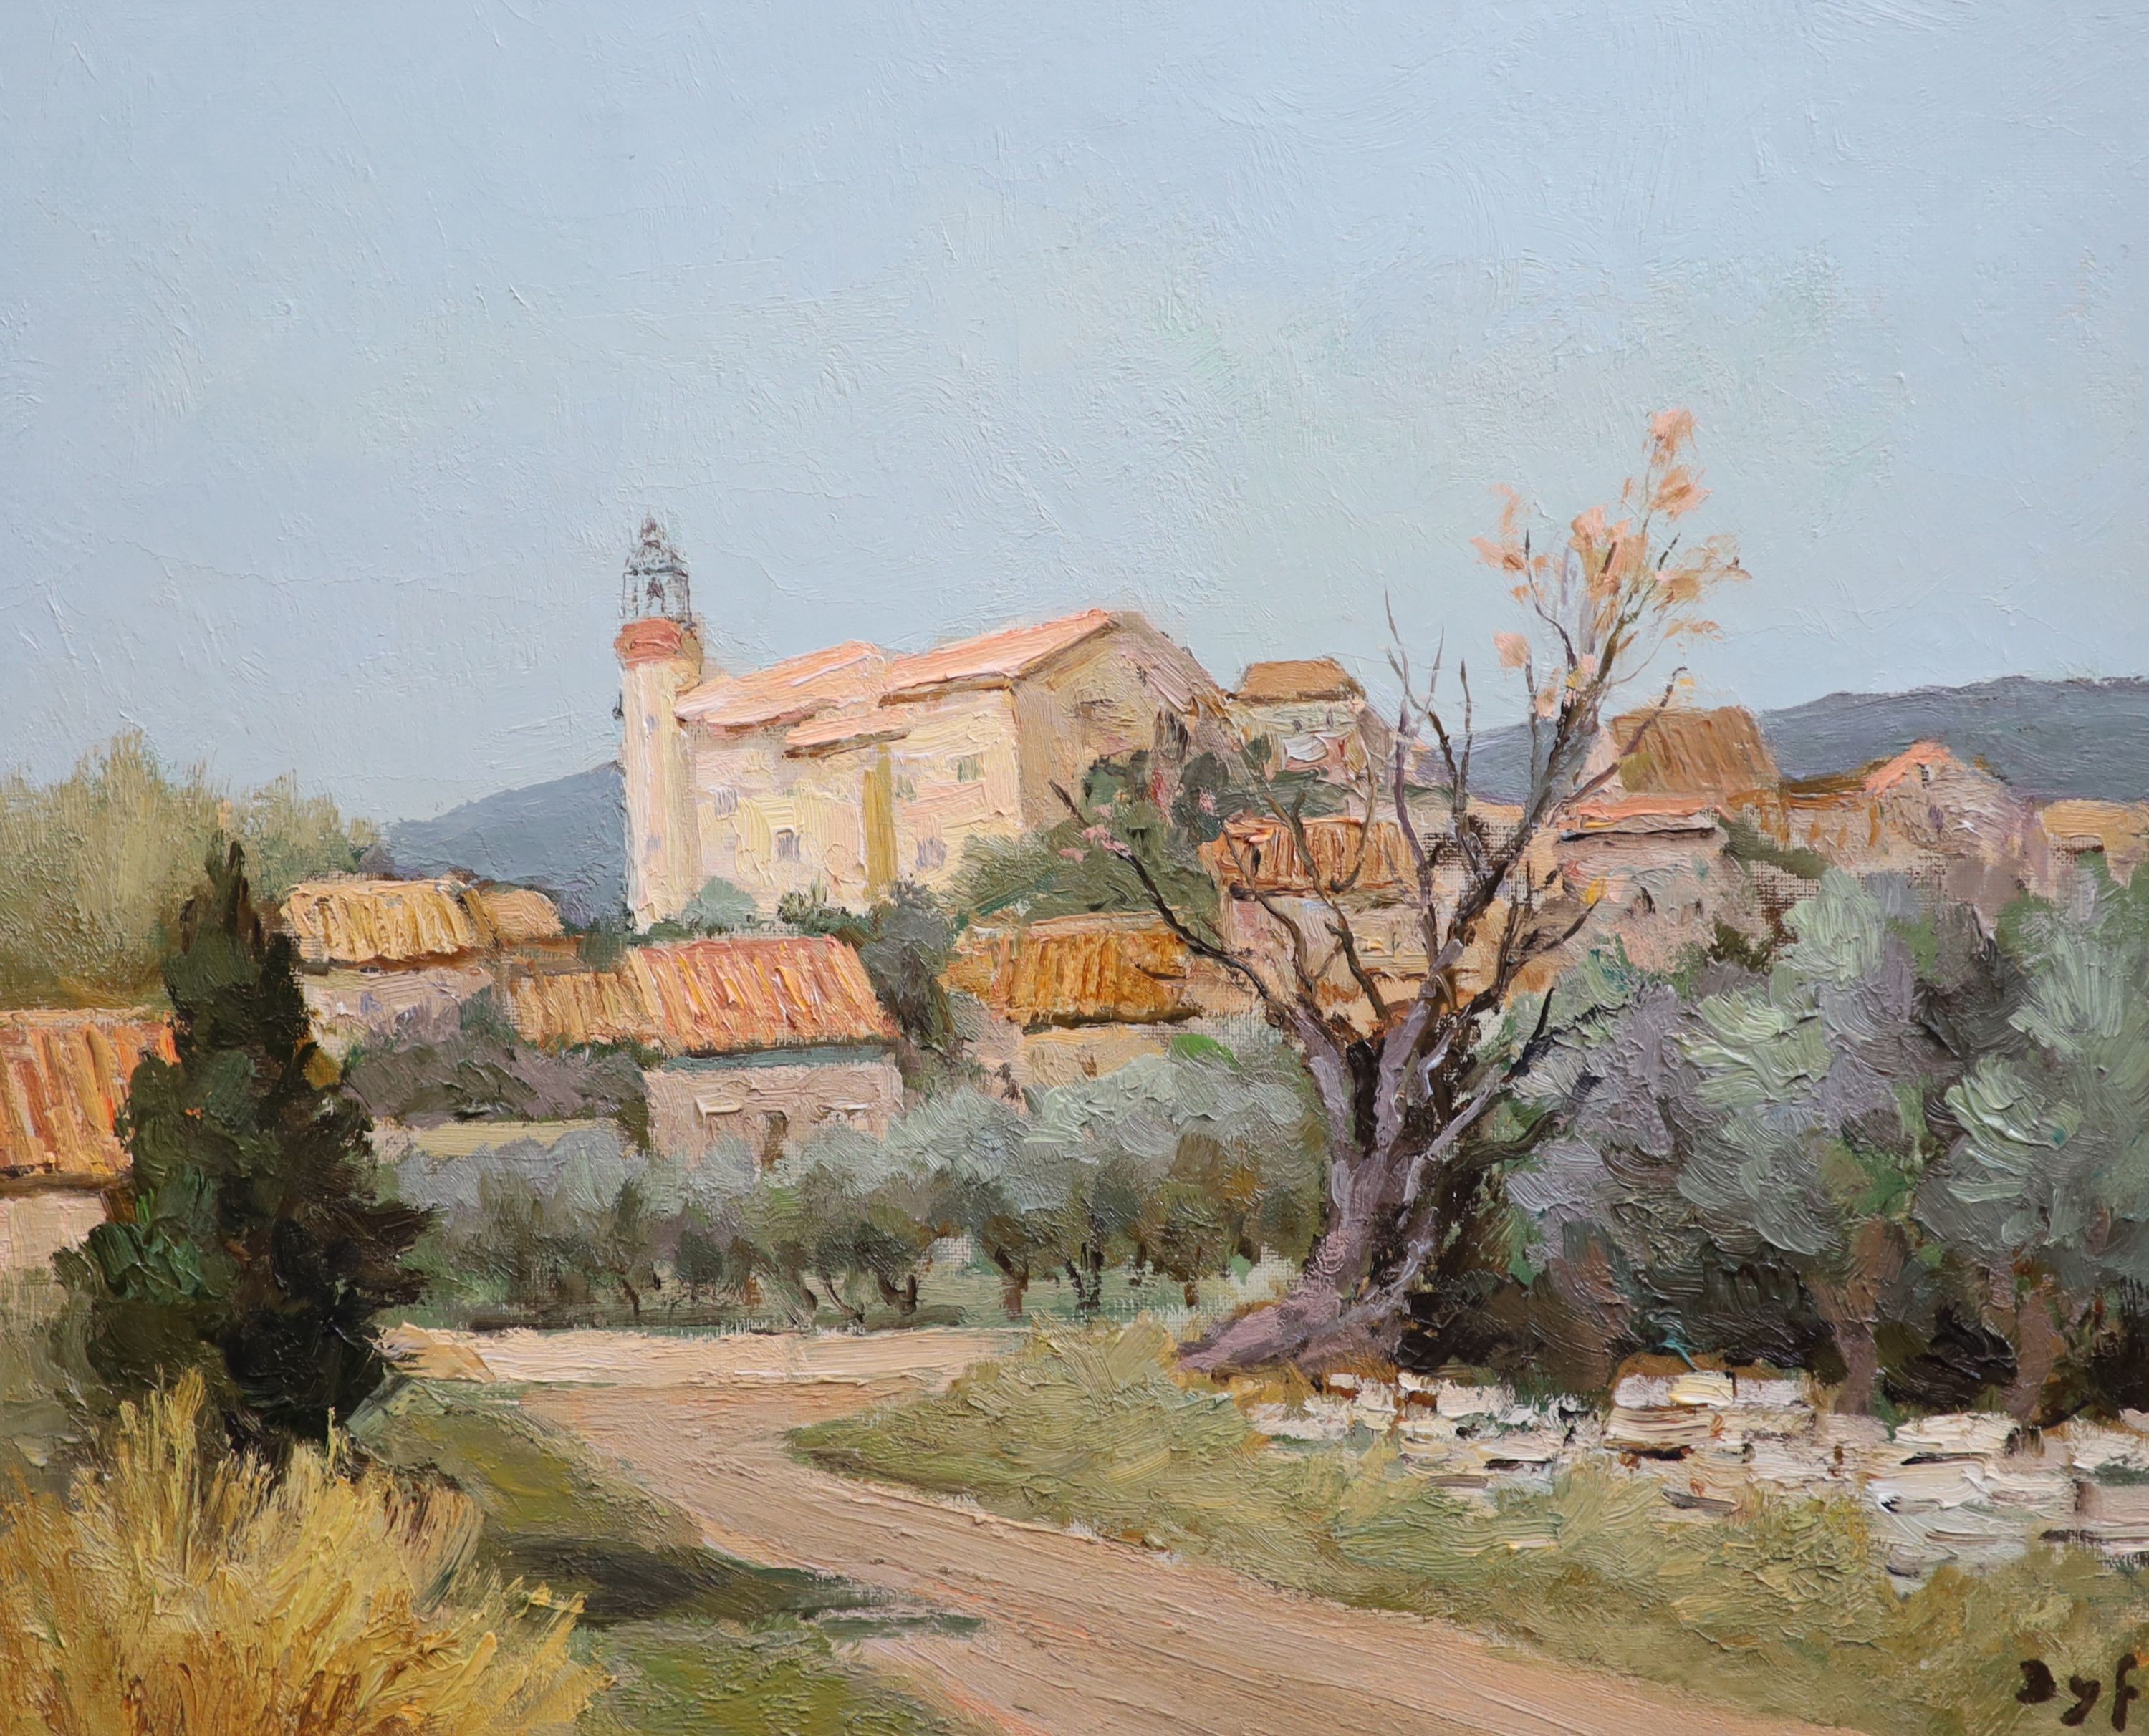 Marcel Dyf (French, 1899-1985), ‘Village de Provence’, oil on canvas, 38 x 46cm.                                                                                                                                            